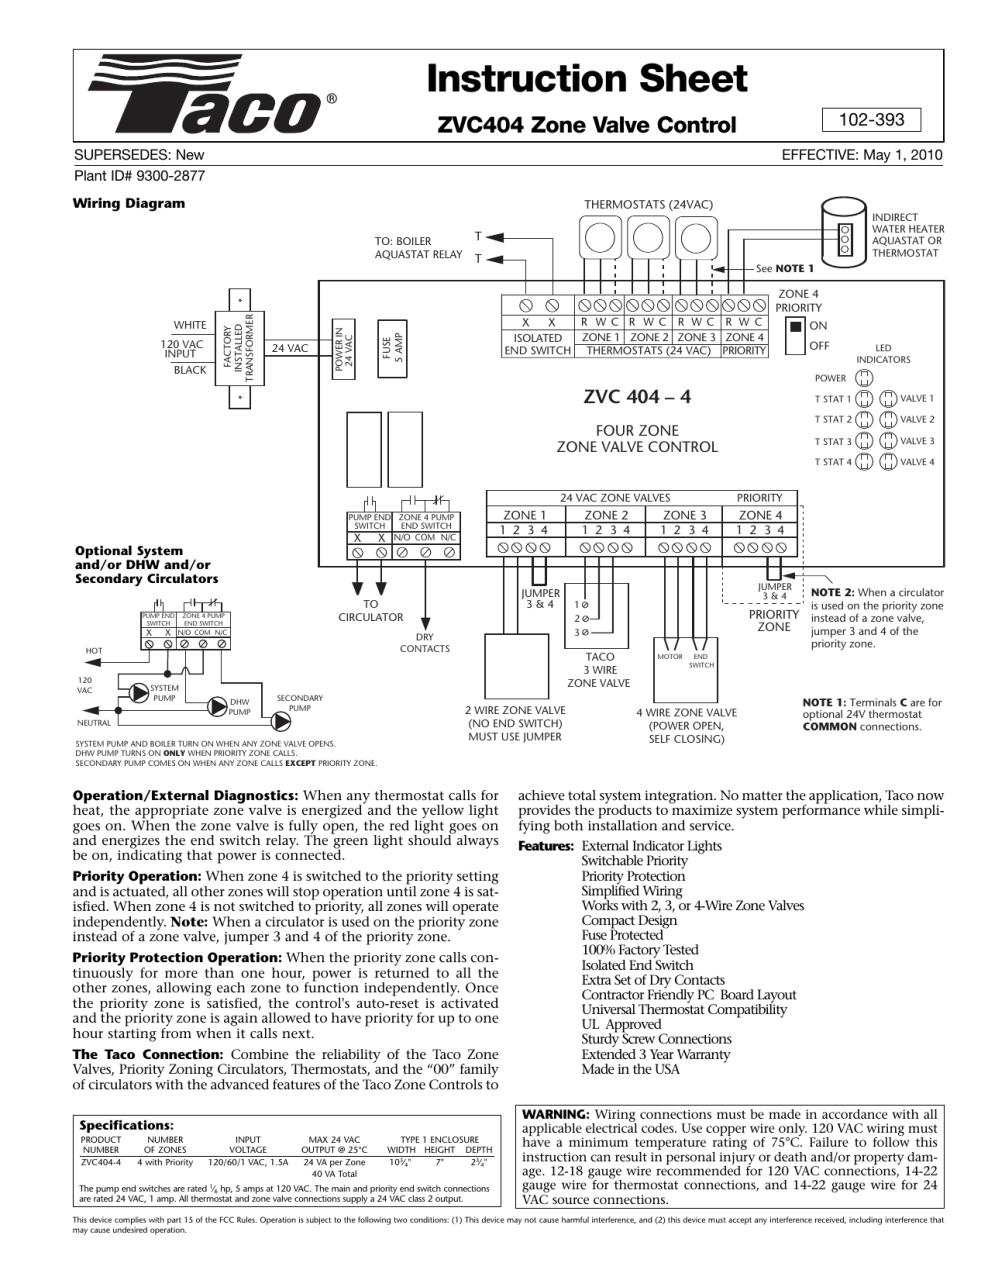 Taco Zone Valve 555 102 Wiring Diagram Wiring Diagram